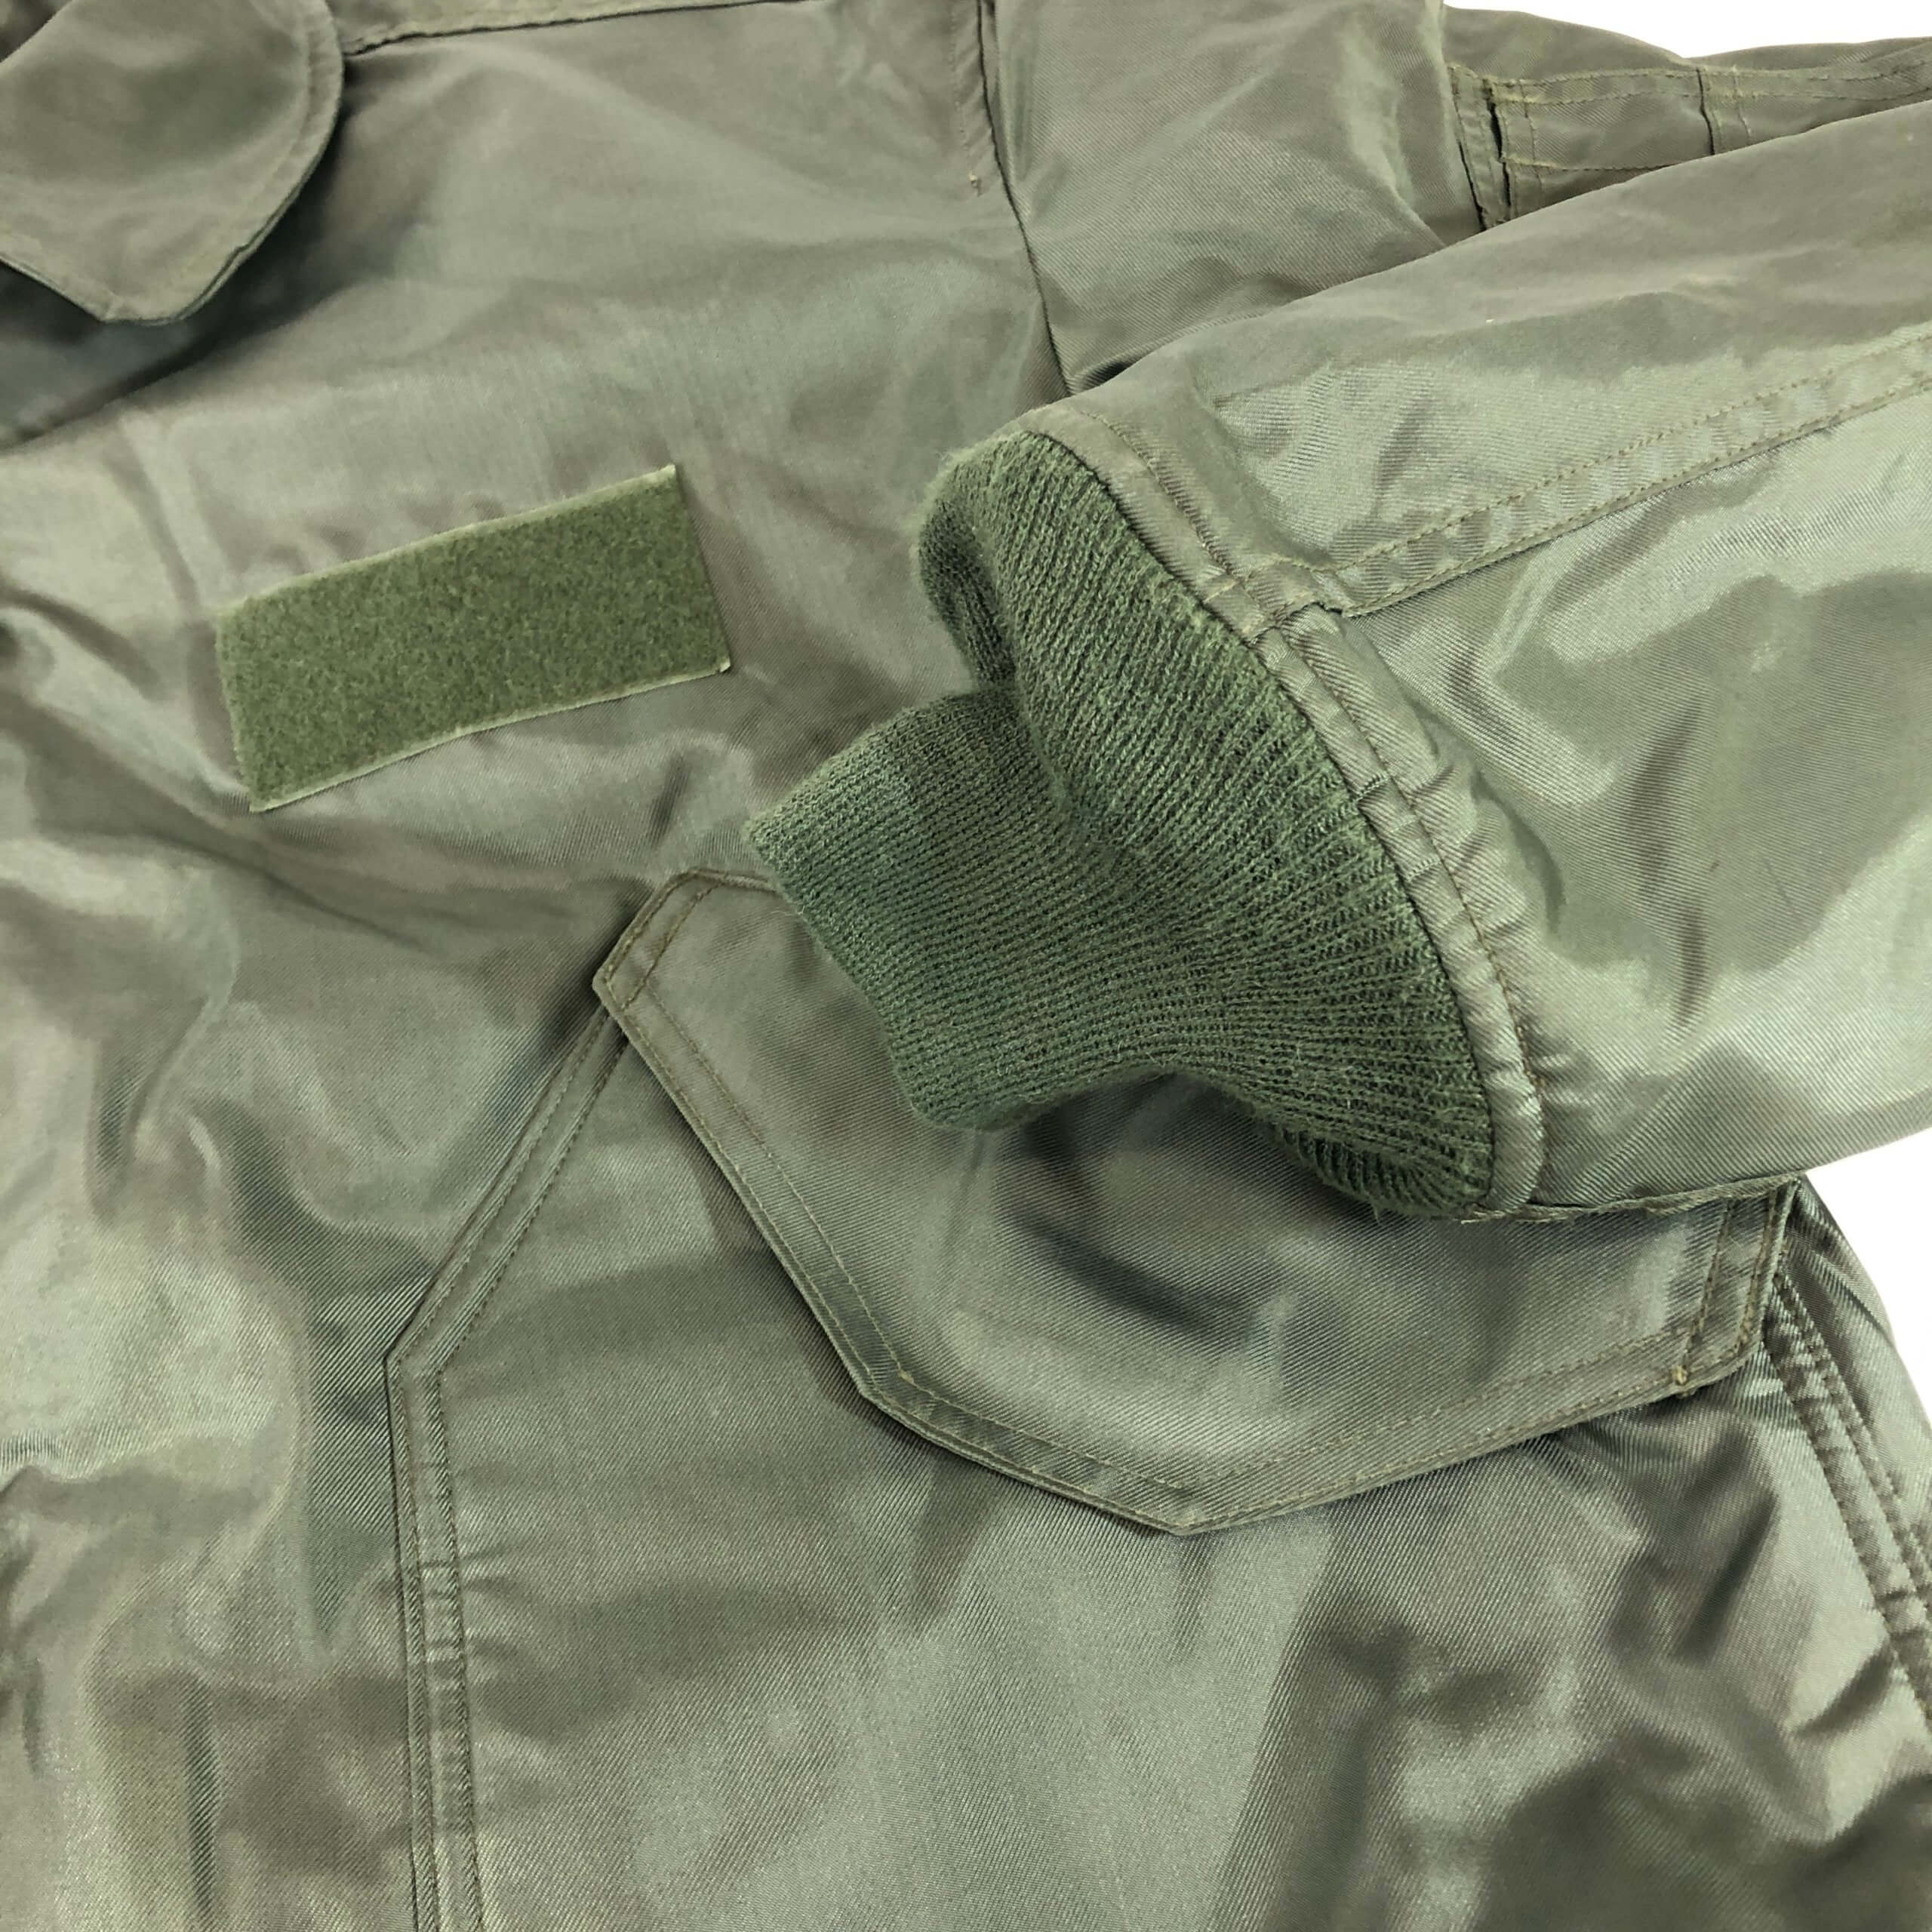 USGI Cold Weather Flyers Jacket, CWU-45/P, Foliage Green [Genuine